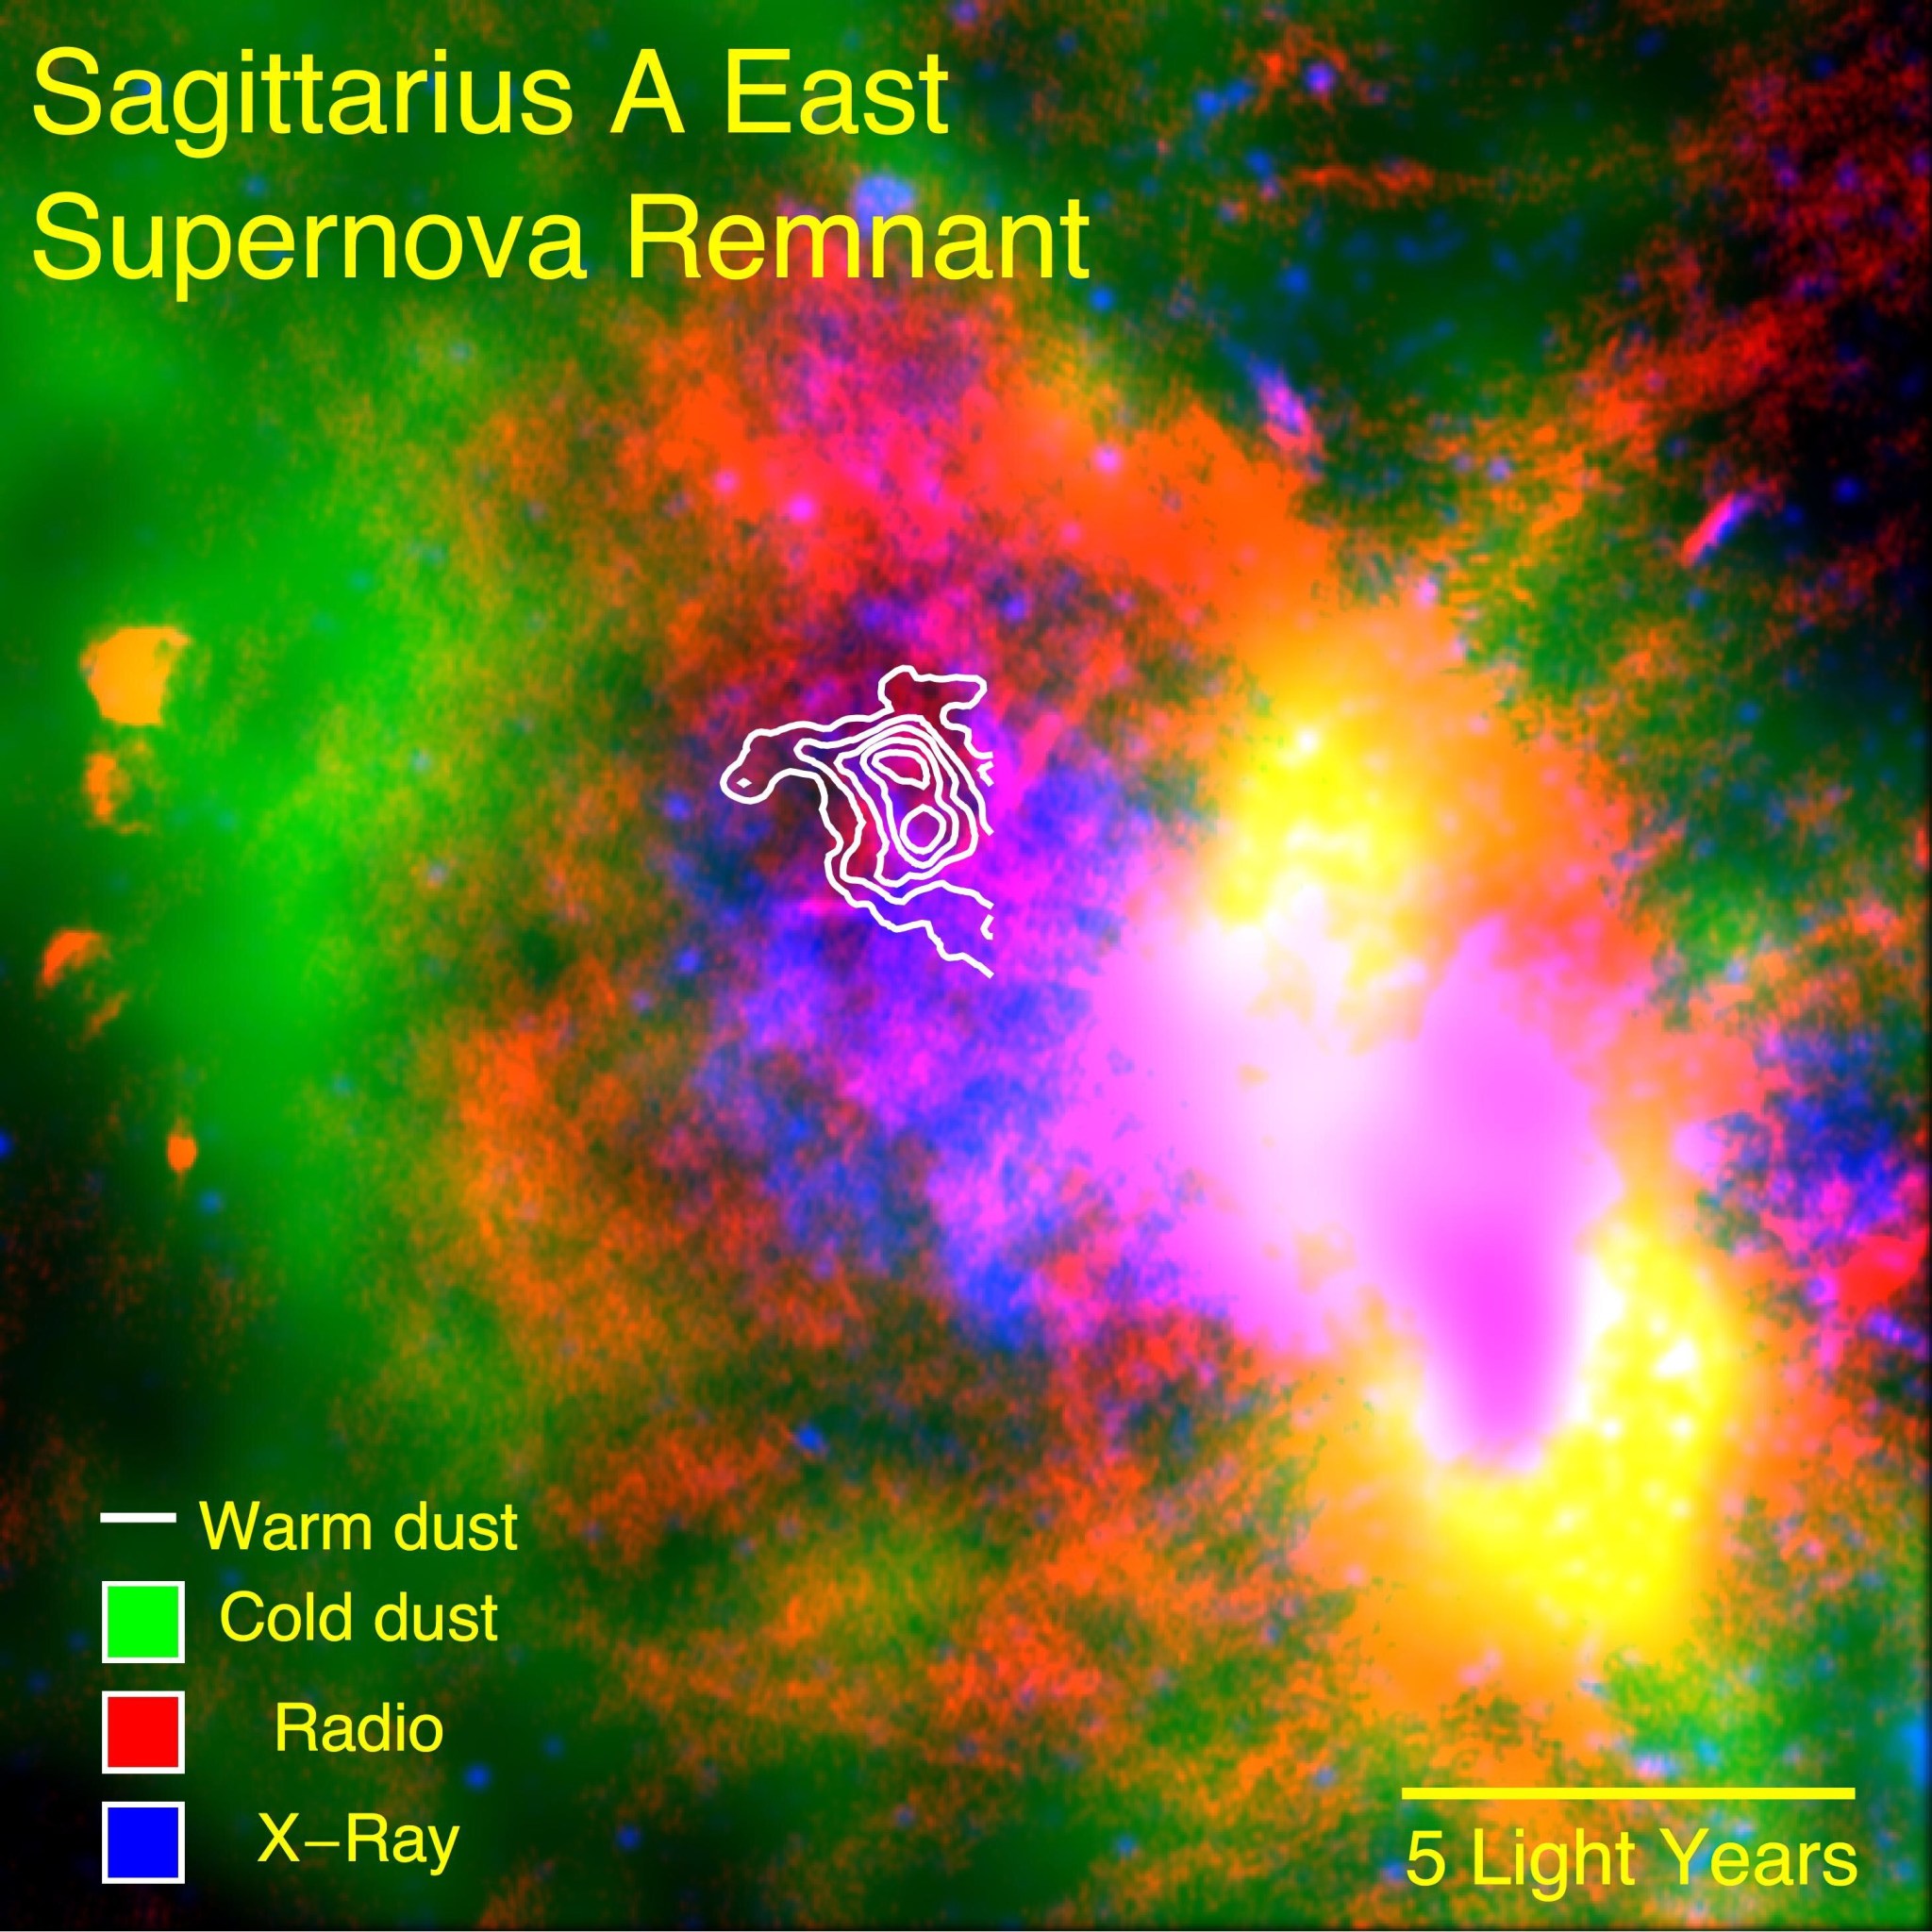 SOFIA data on a supernova